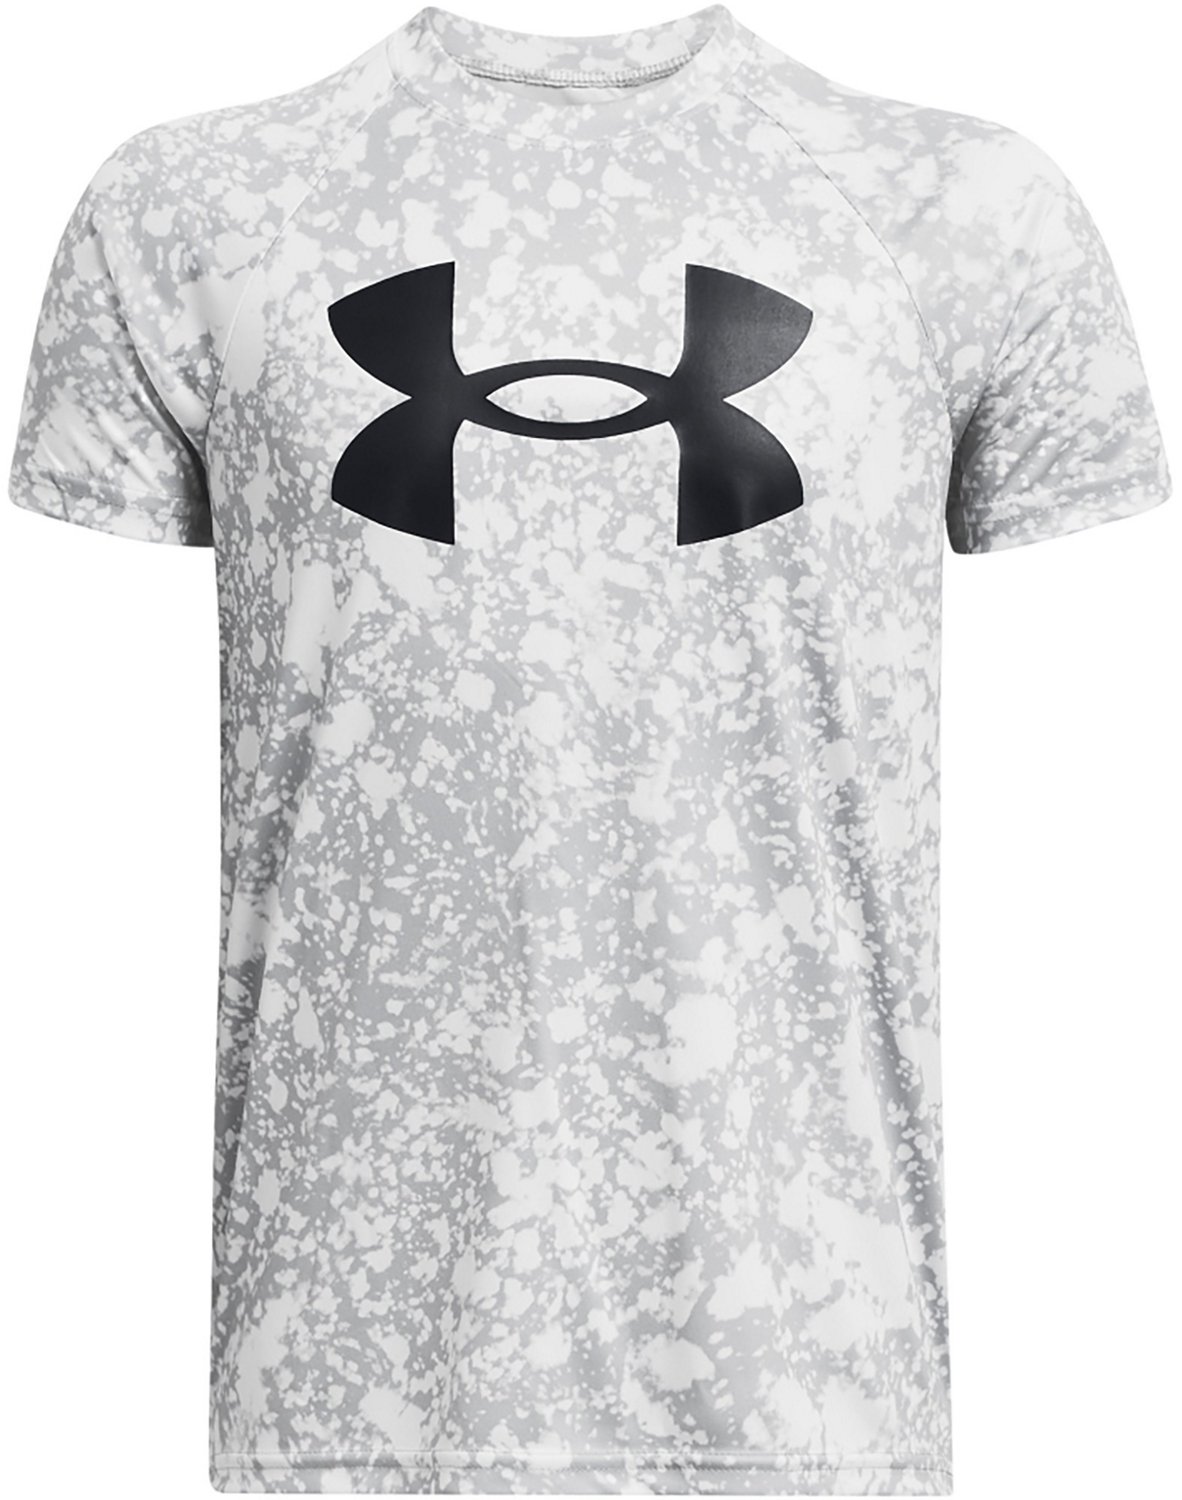 Under Armour Boys UA Tech Printed Short Sleeve T-shirt